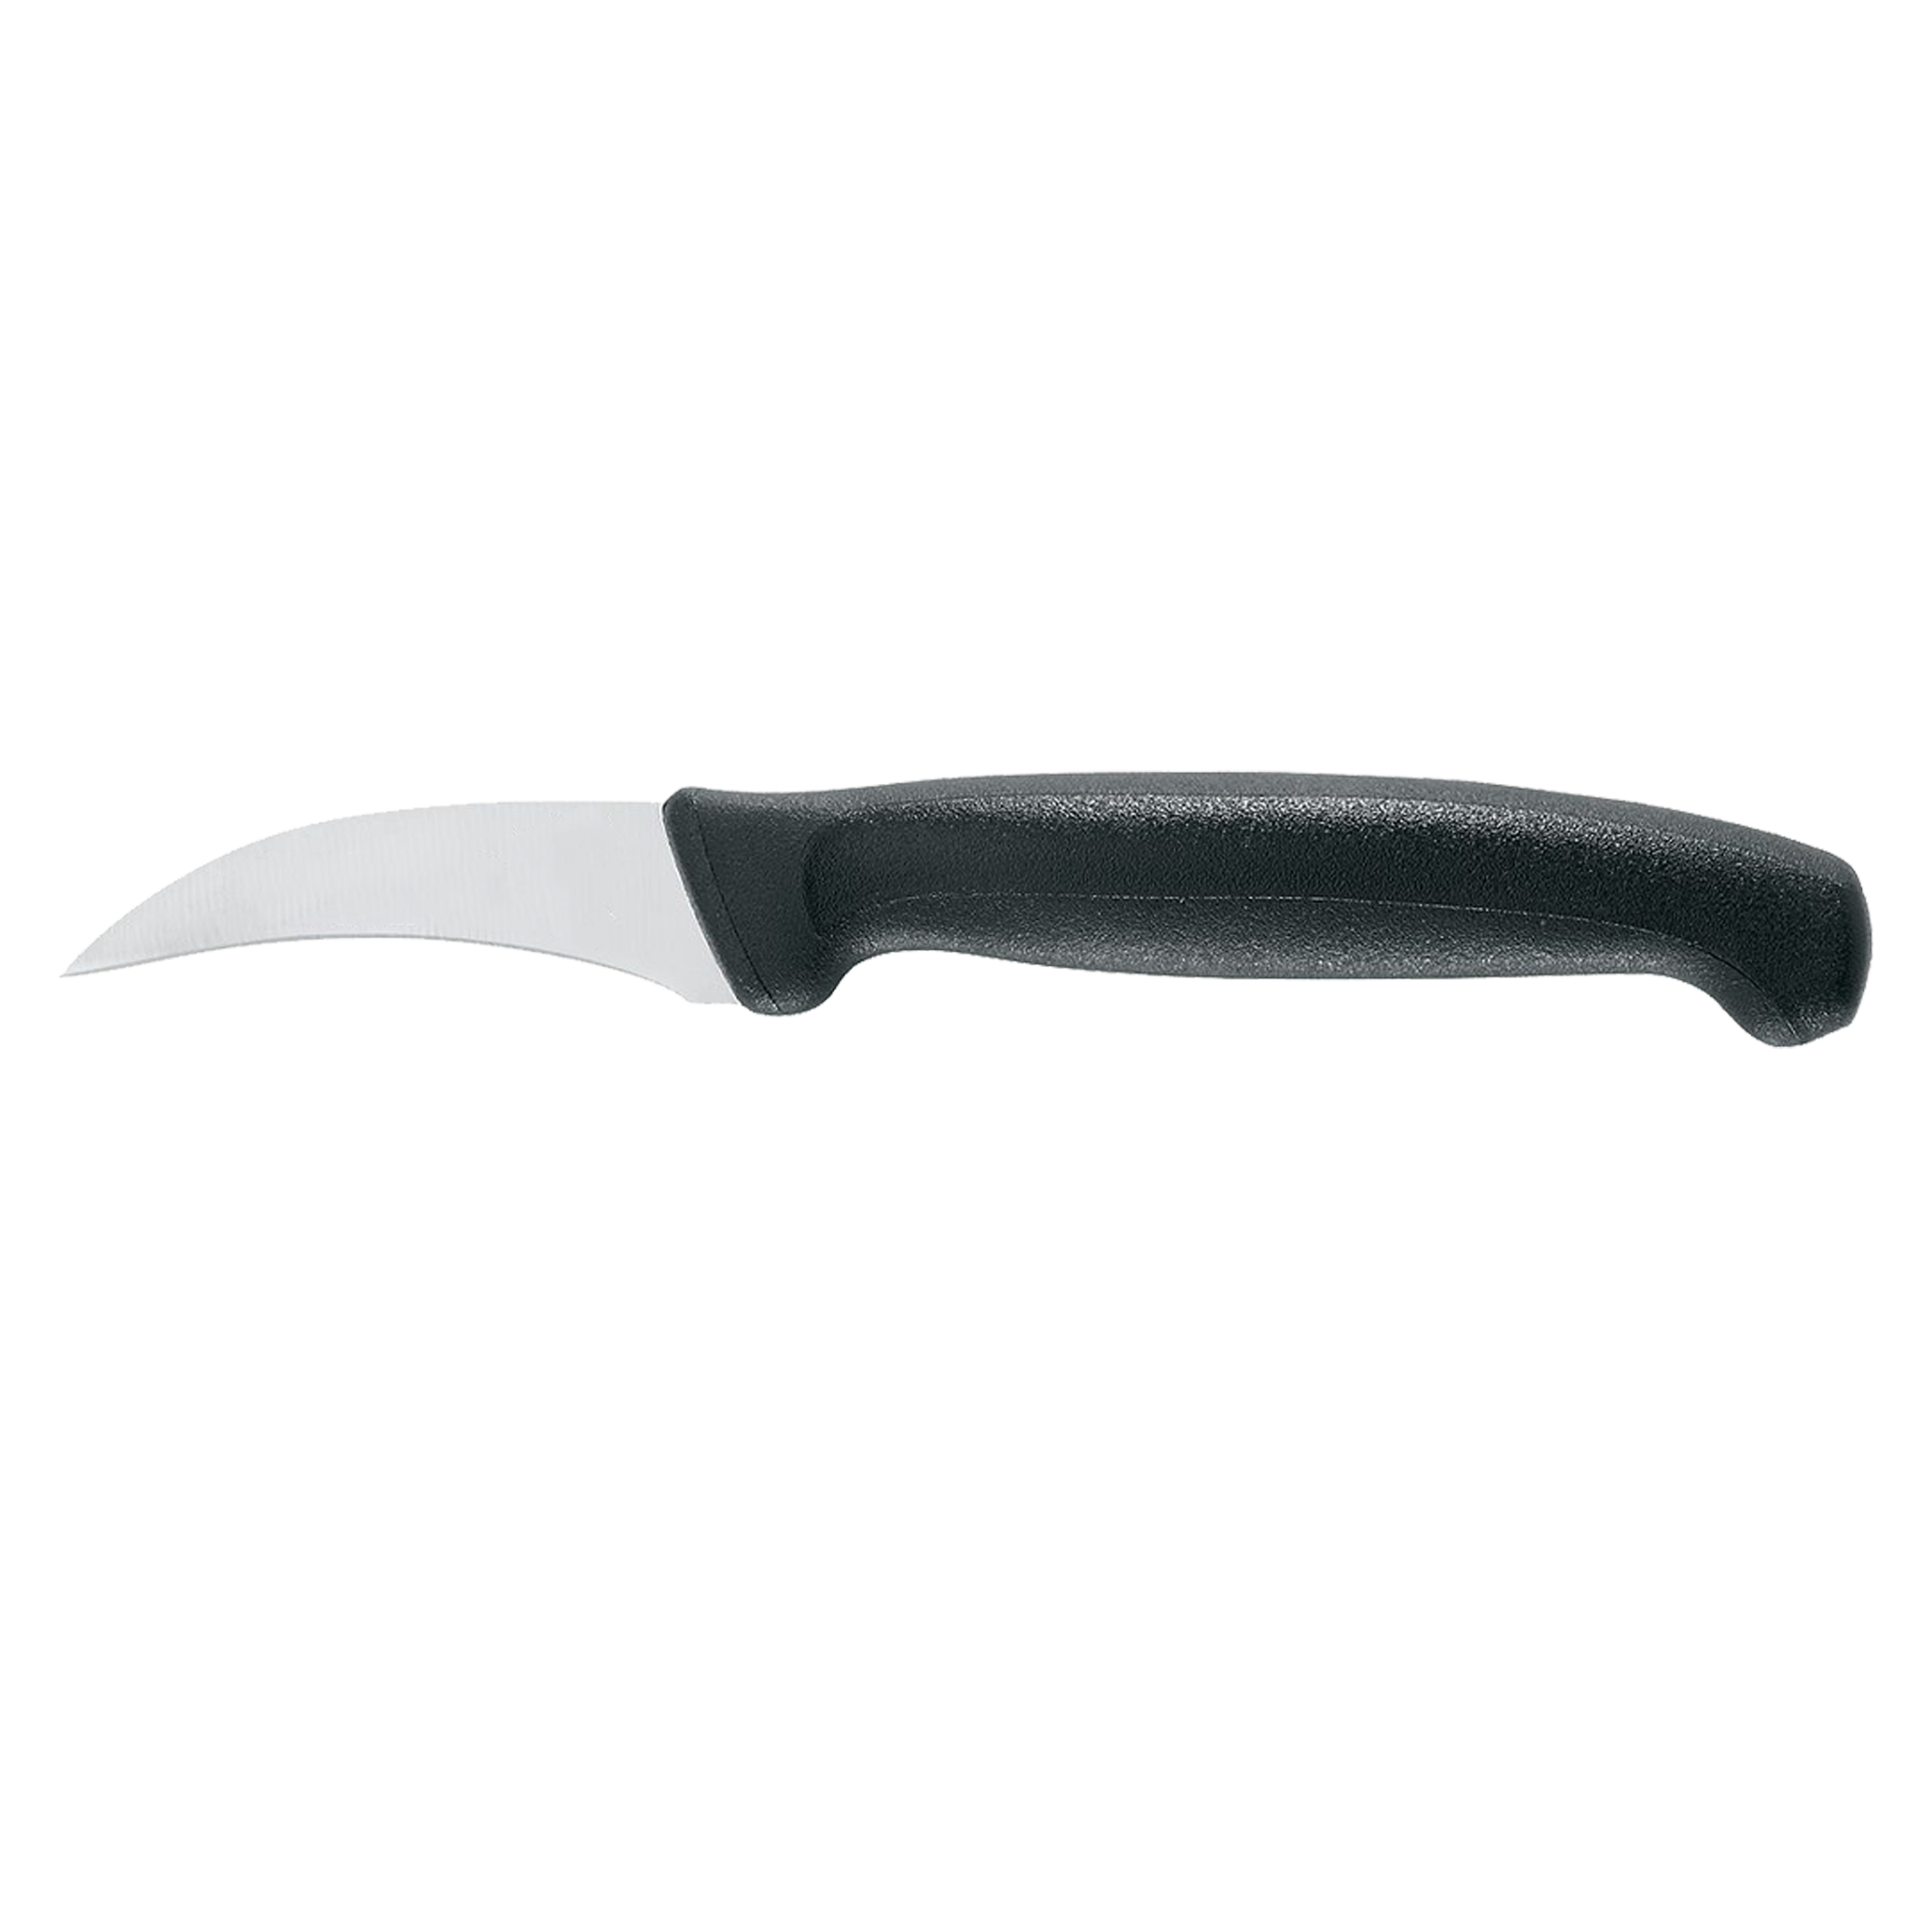 Curved Blade Knife